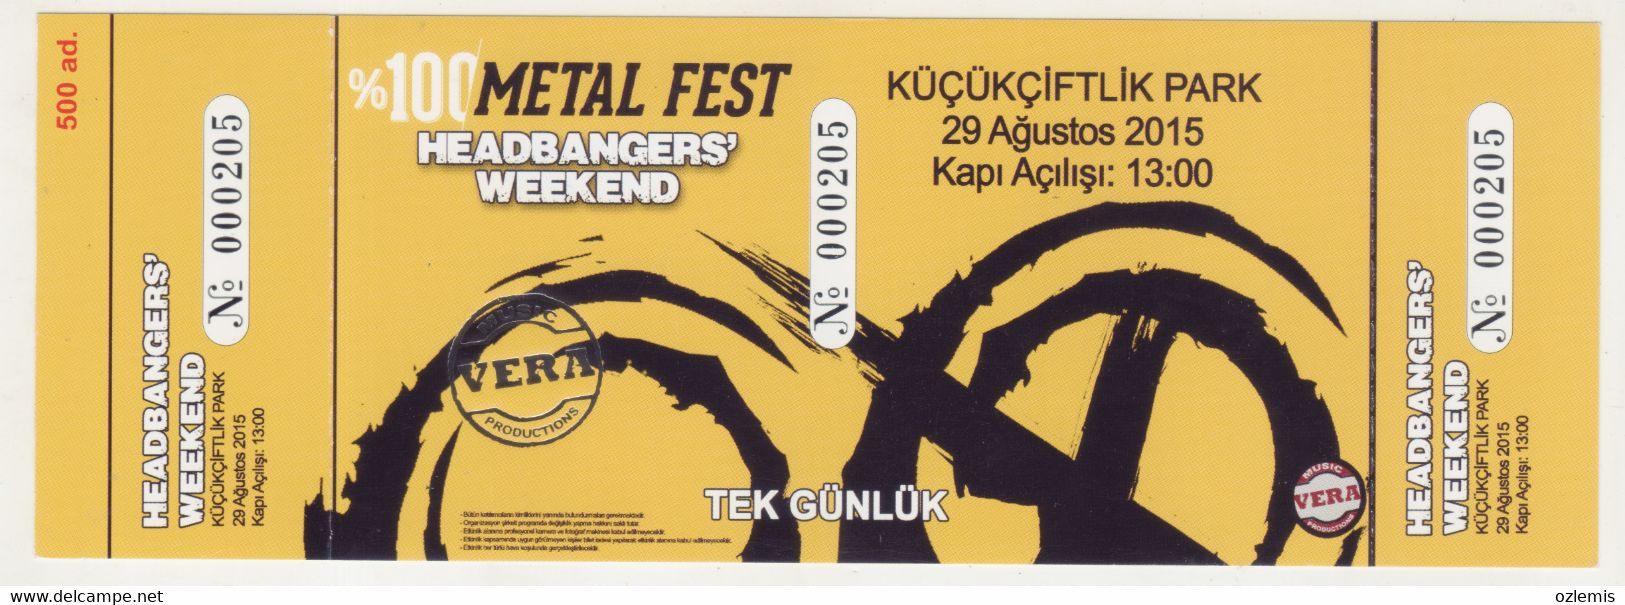 HEADBANGERS' WEEKEND,%100 METAL FEST 2015 TICKET ISTANBUL TURKEY - Concerttickets